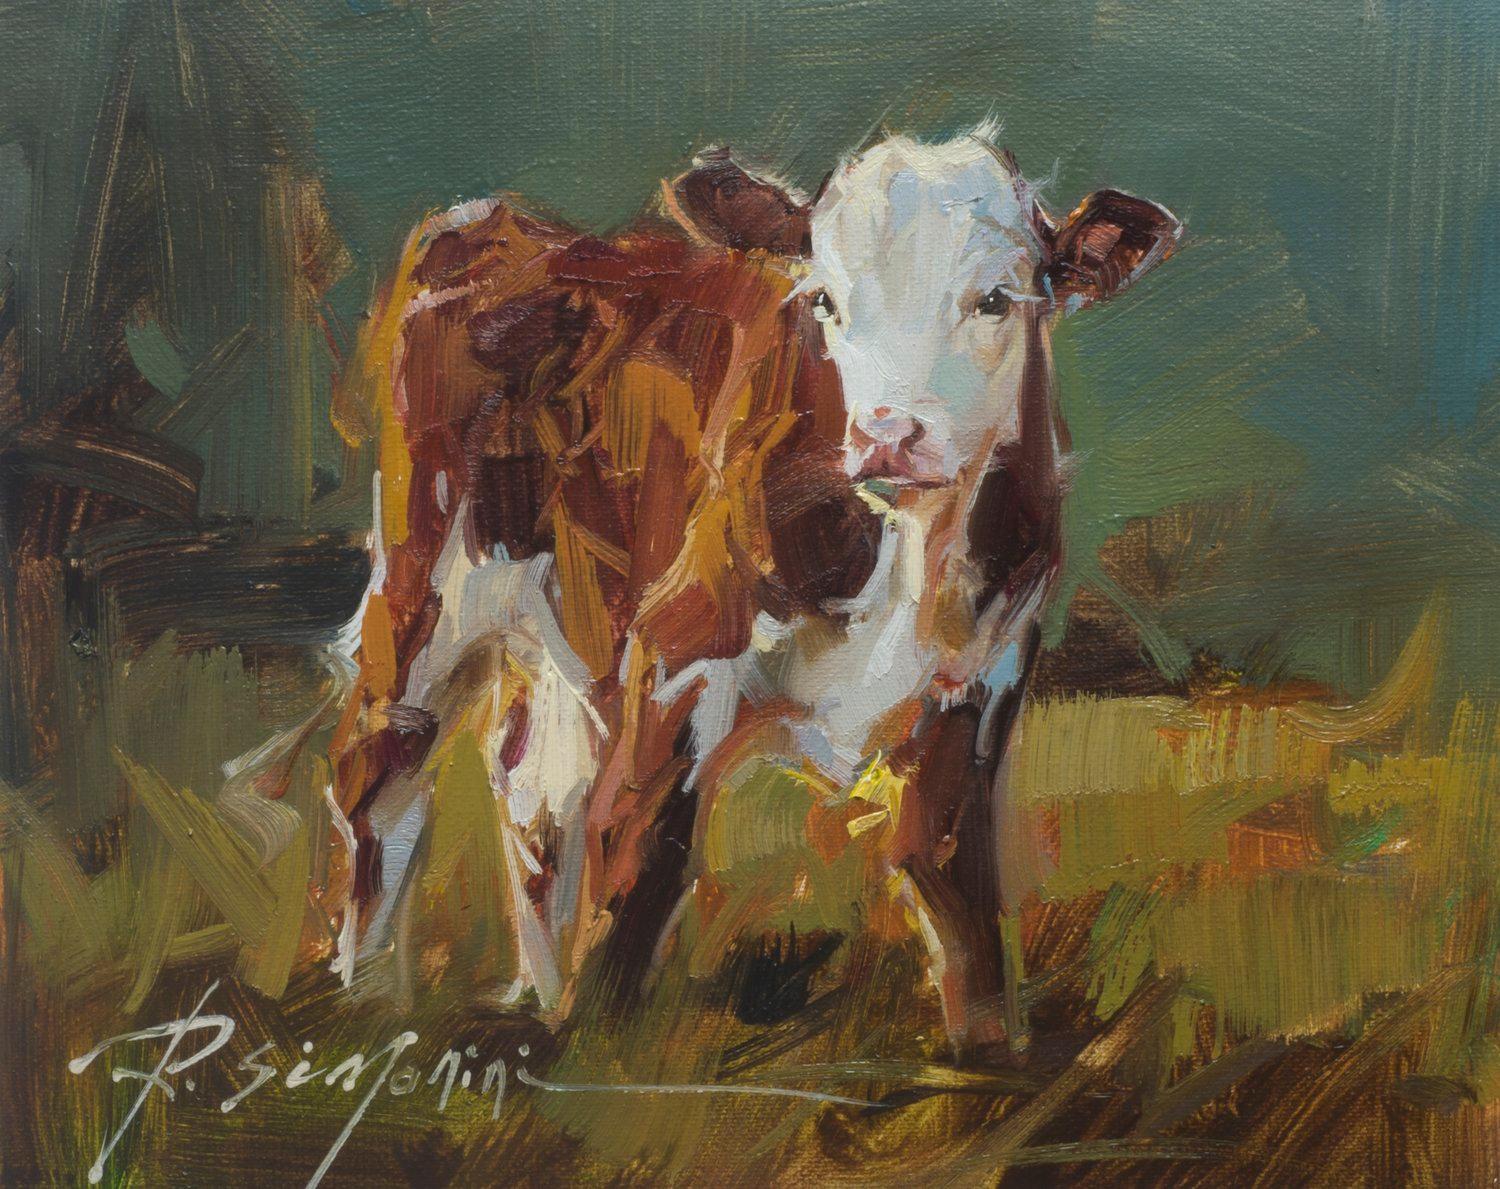 Ray Simonini, "Violet" 8x10 Impressionist Farm Animal Cow Oil Painting on Canvas